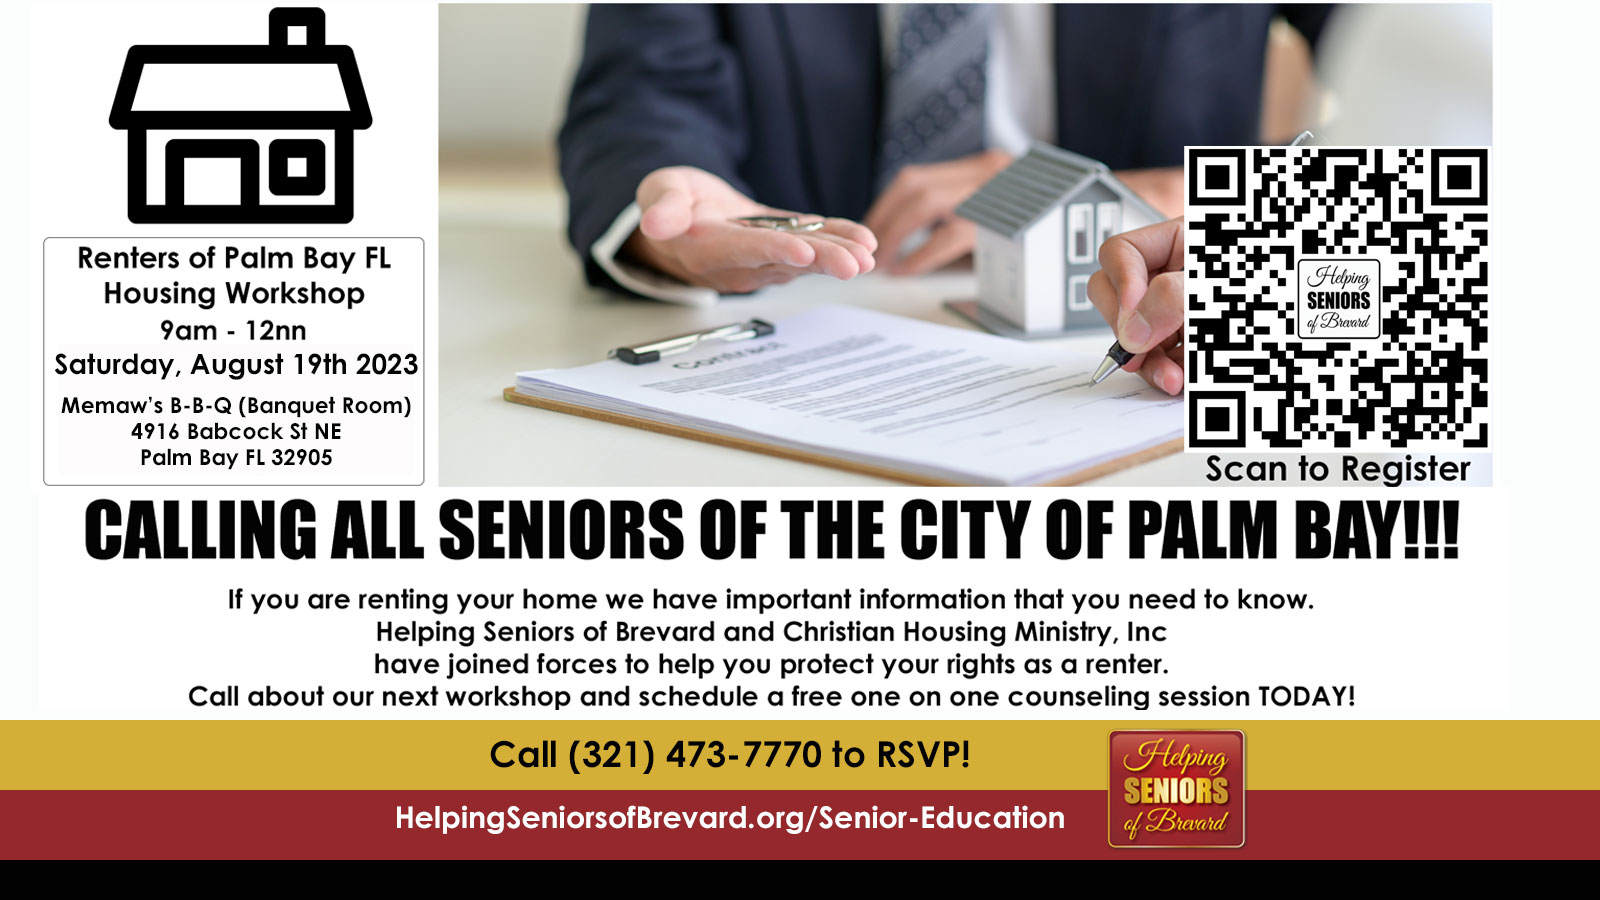 Helping Seniors "Senior Renters of Palm Bay" Workshop